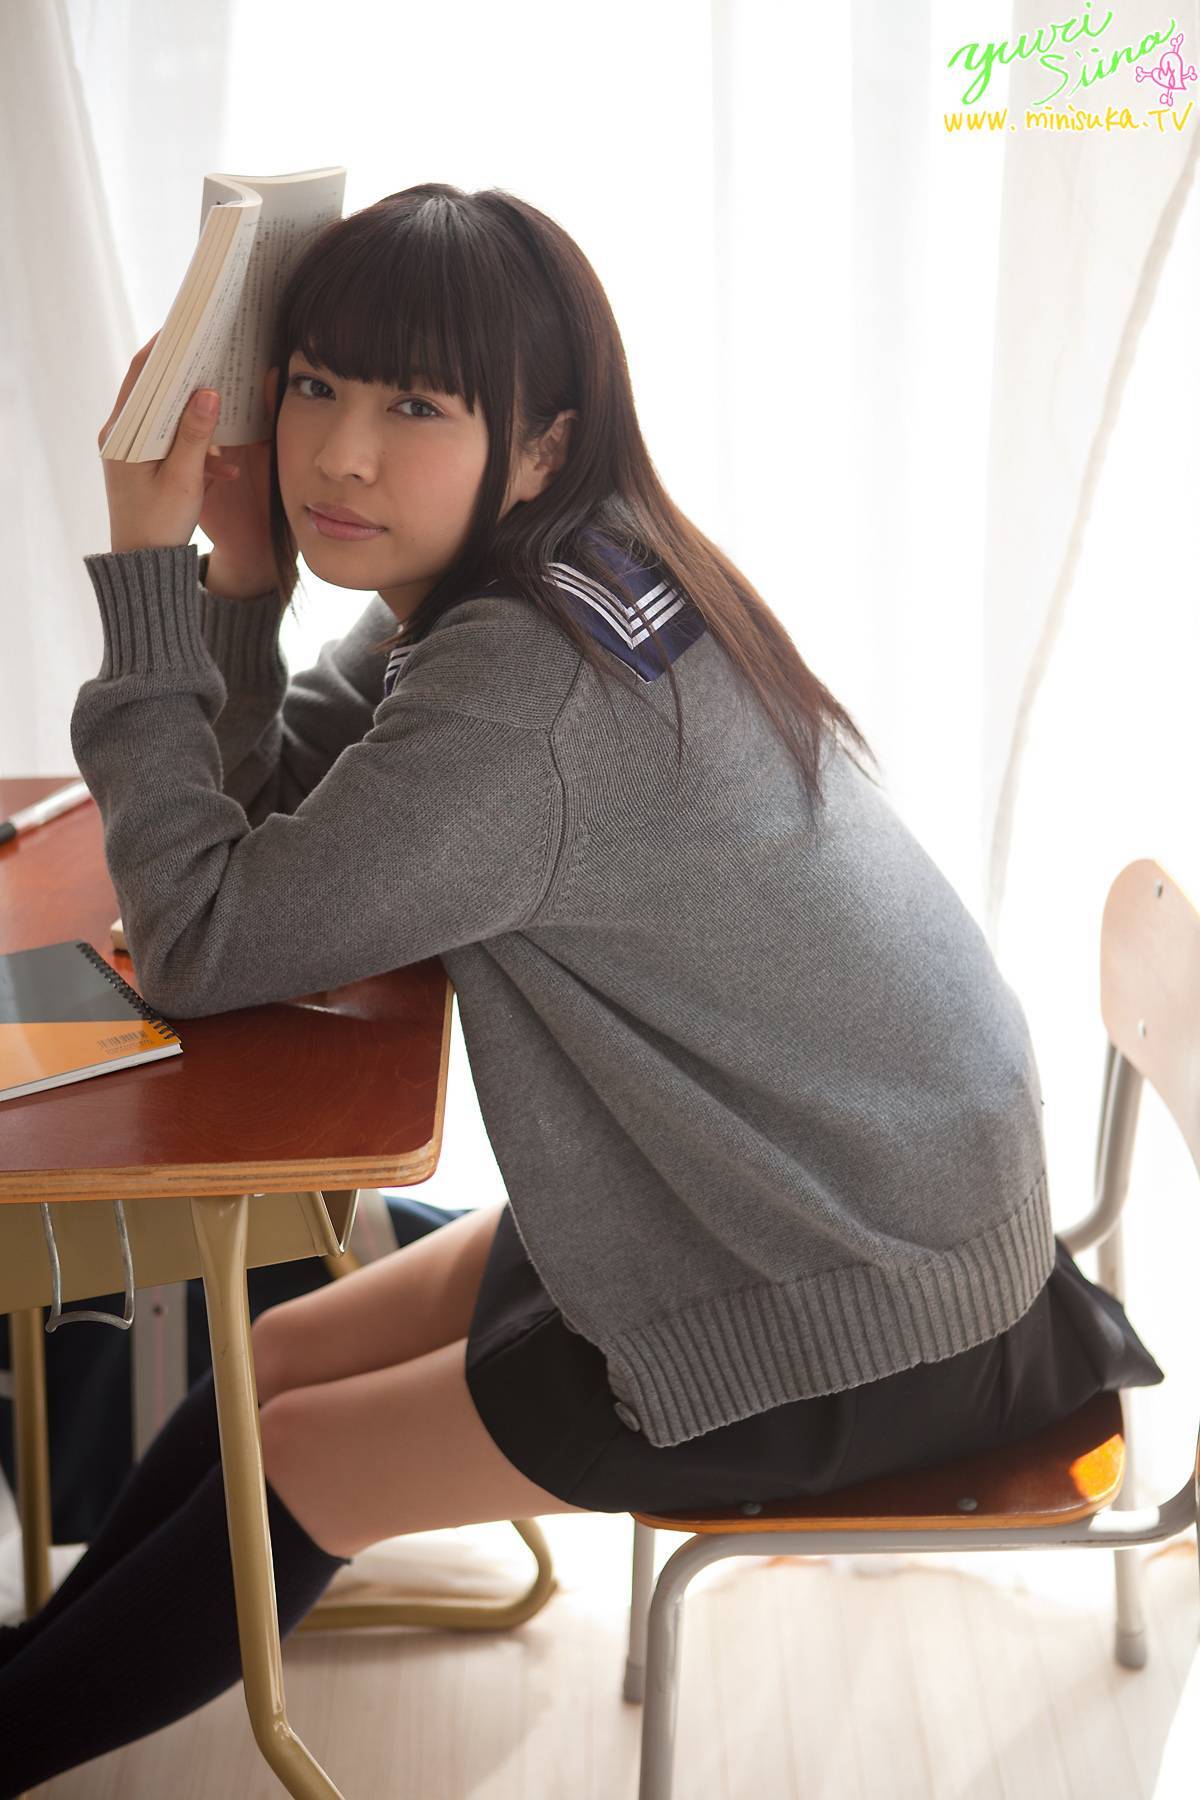 Yuuri Shiina, female high school student in active service[ Minisuka.tv ] 2011.07